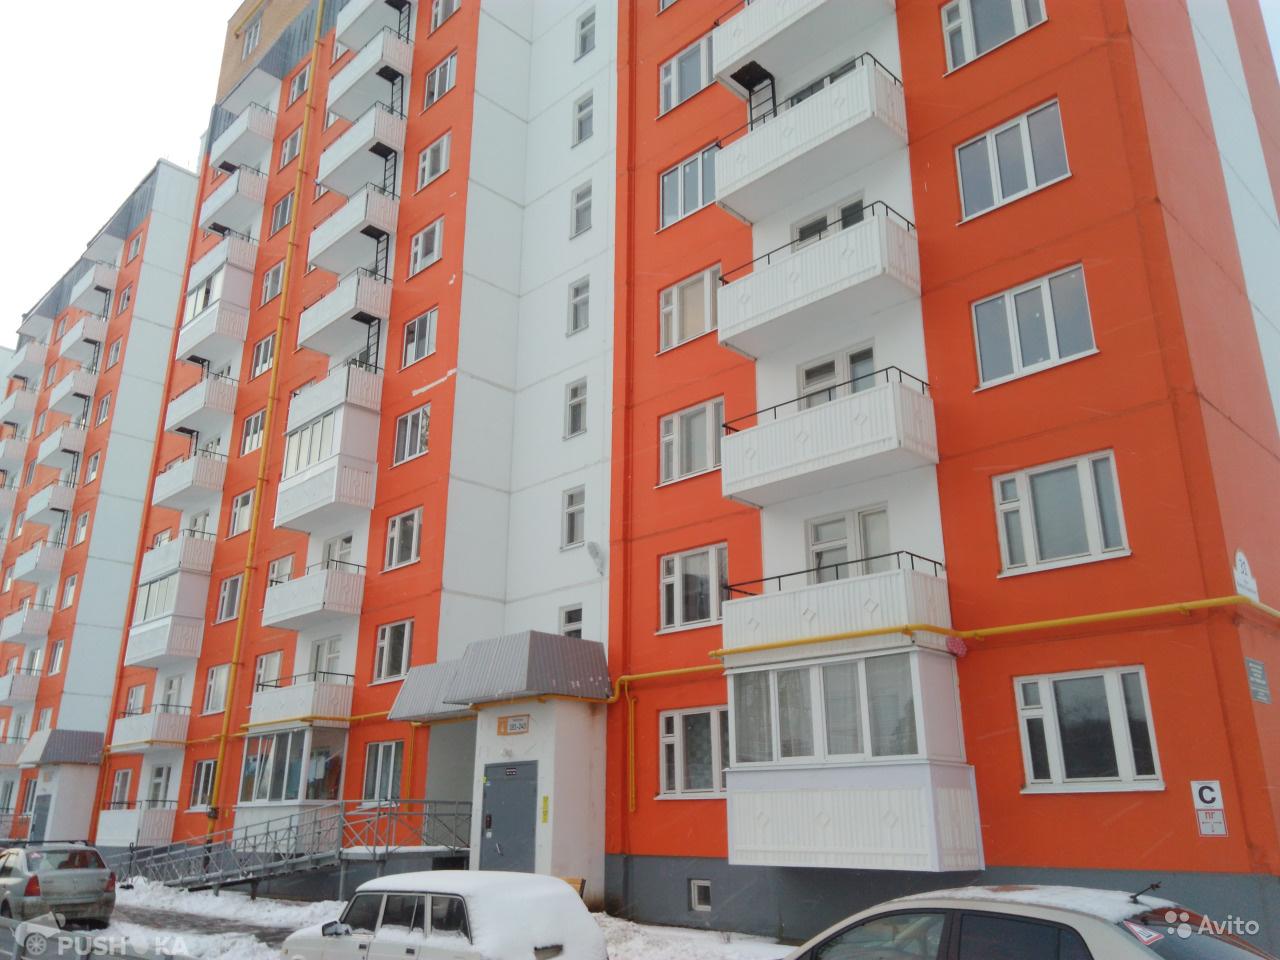 Продаётся 1-комнатная квартира 37.7 кв.м. этаж 9/10 за 2 850 000 руб 